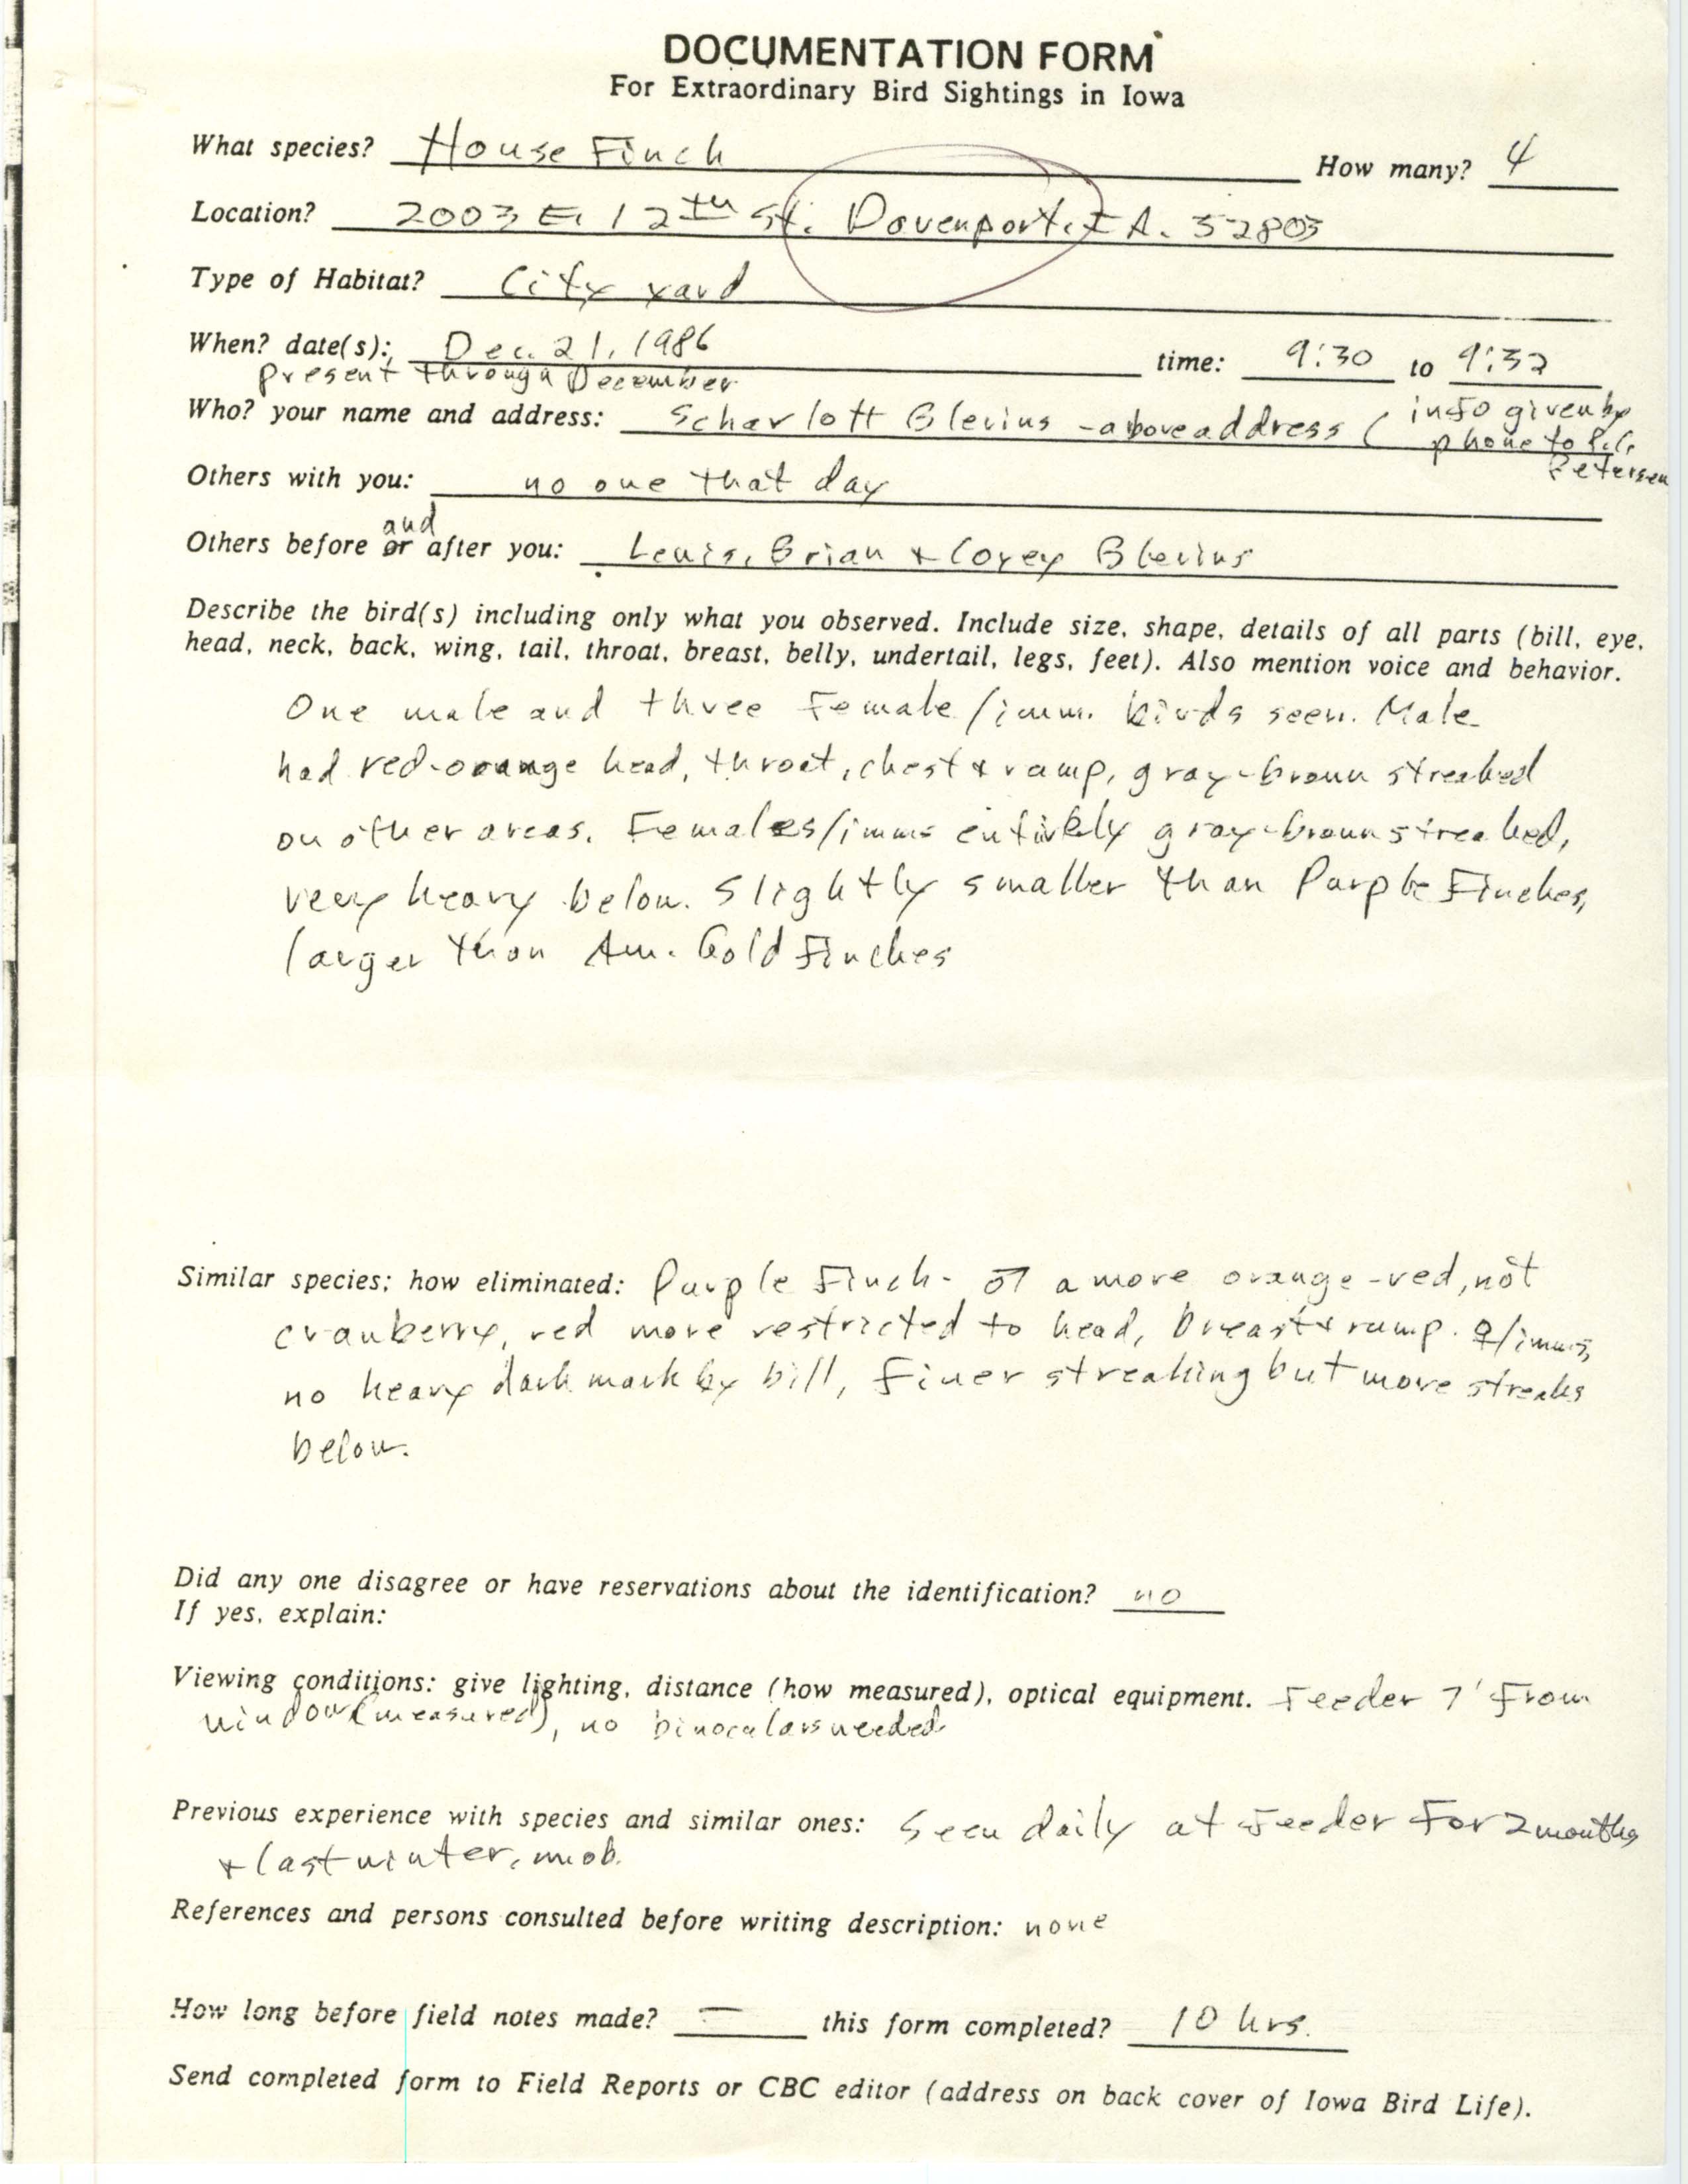 Rare bird documentation form for House Finch at Davenport, 1986